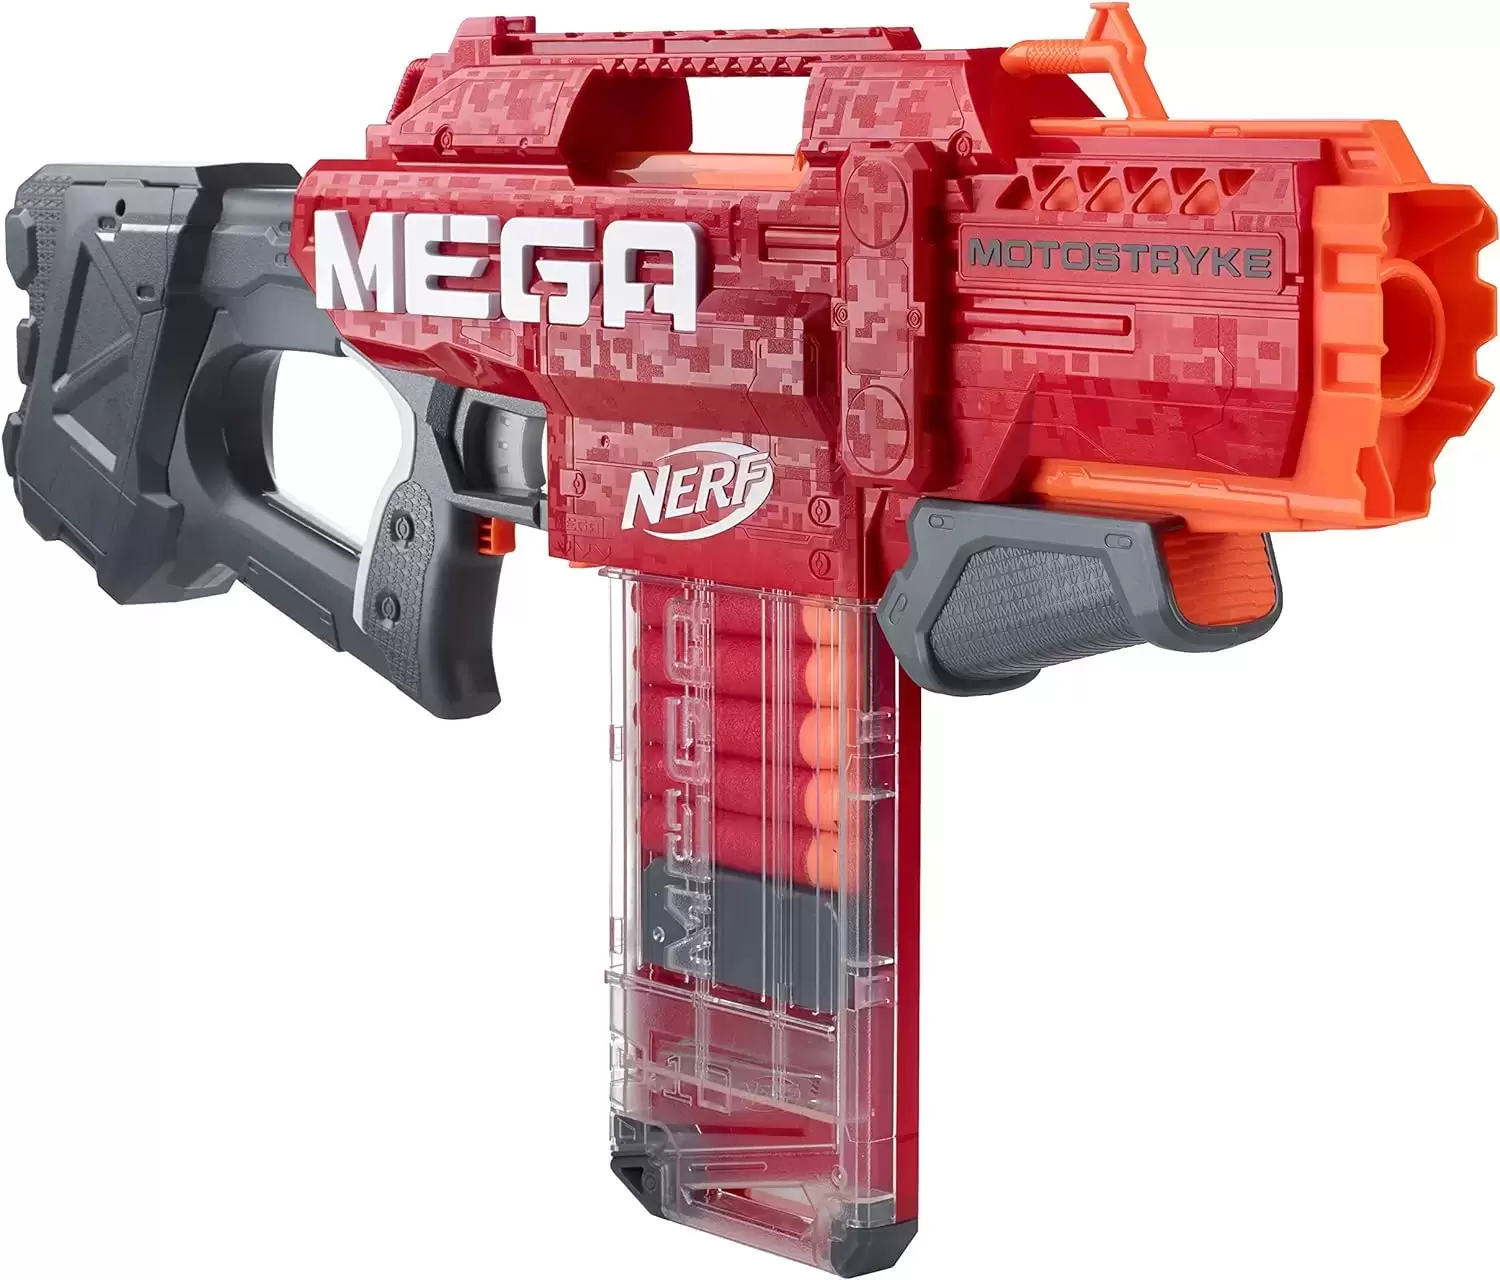 Nerf N-Strike Mega - Motorstryke